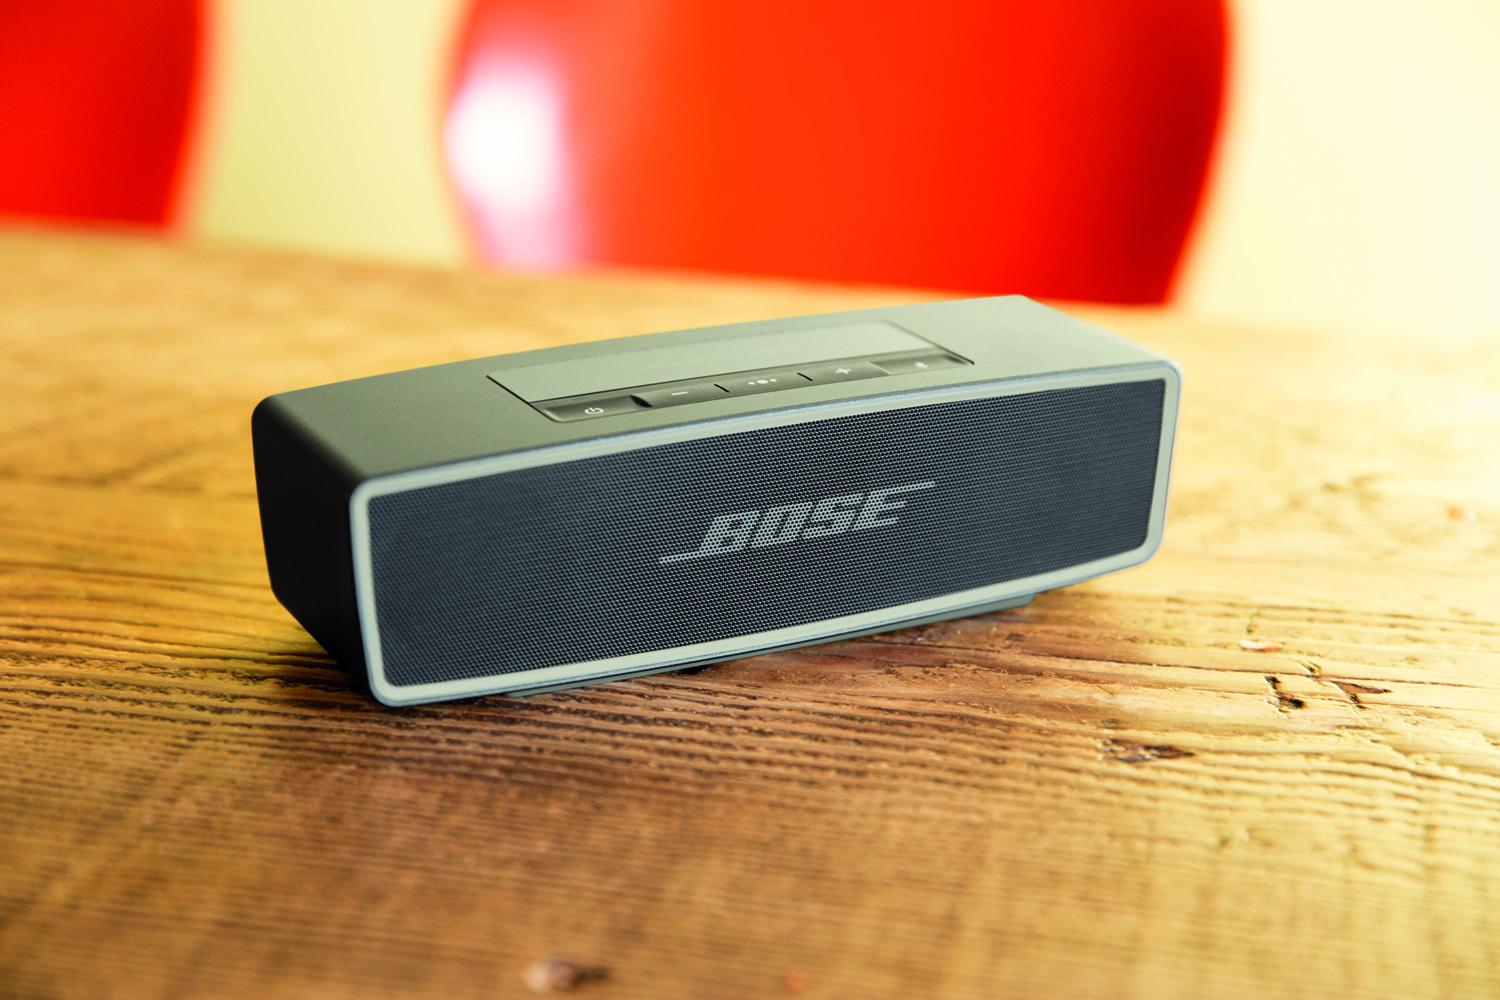 Bose SoundLink Mini II Bluetooth speakers - Black